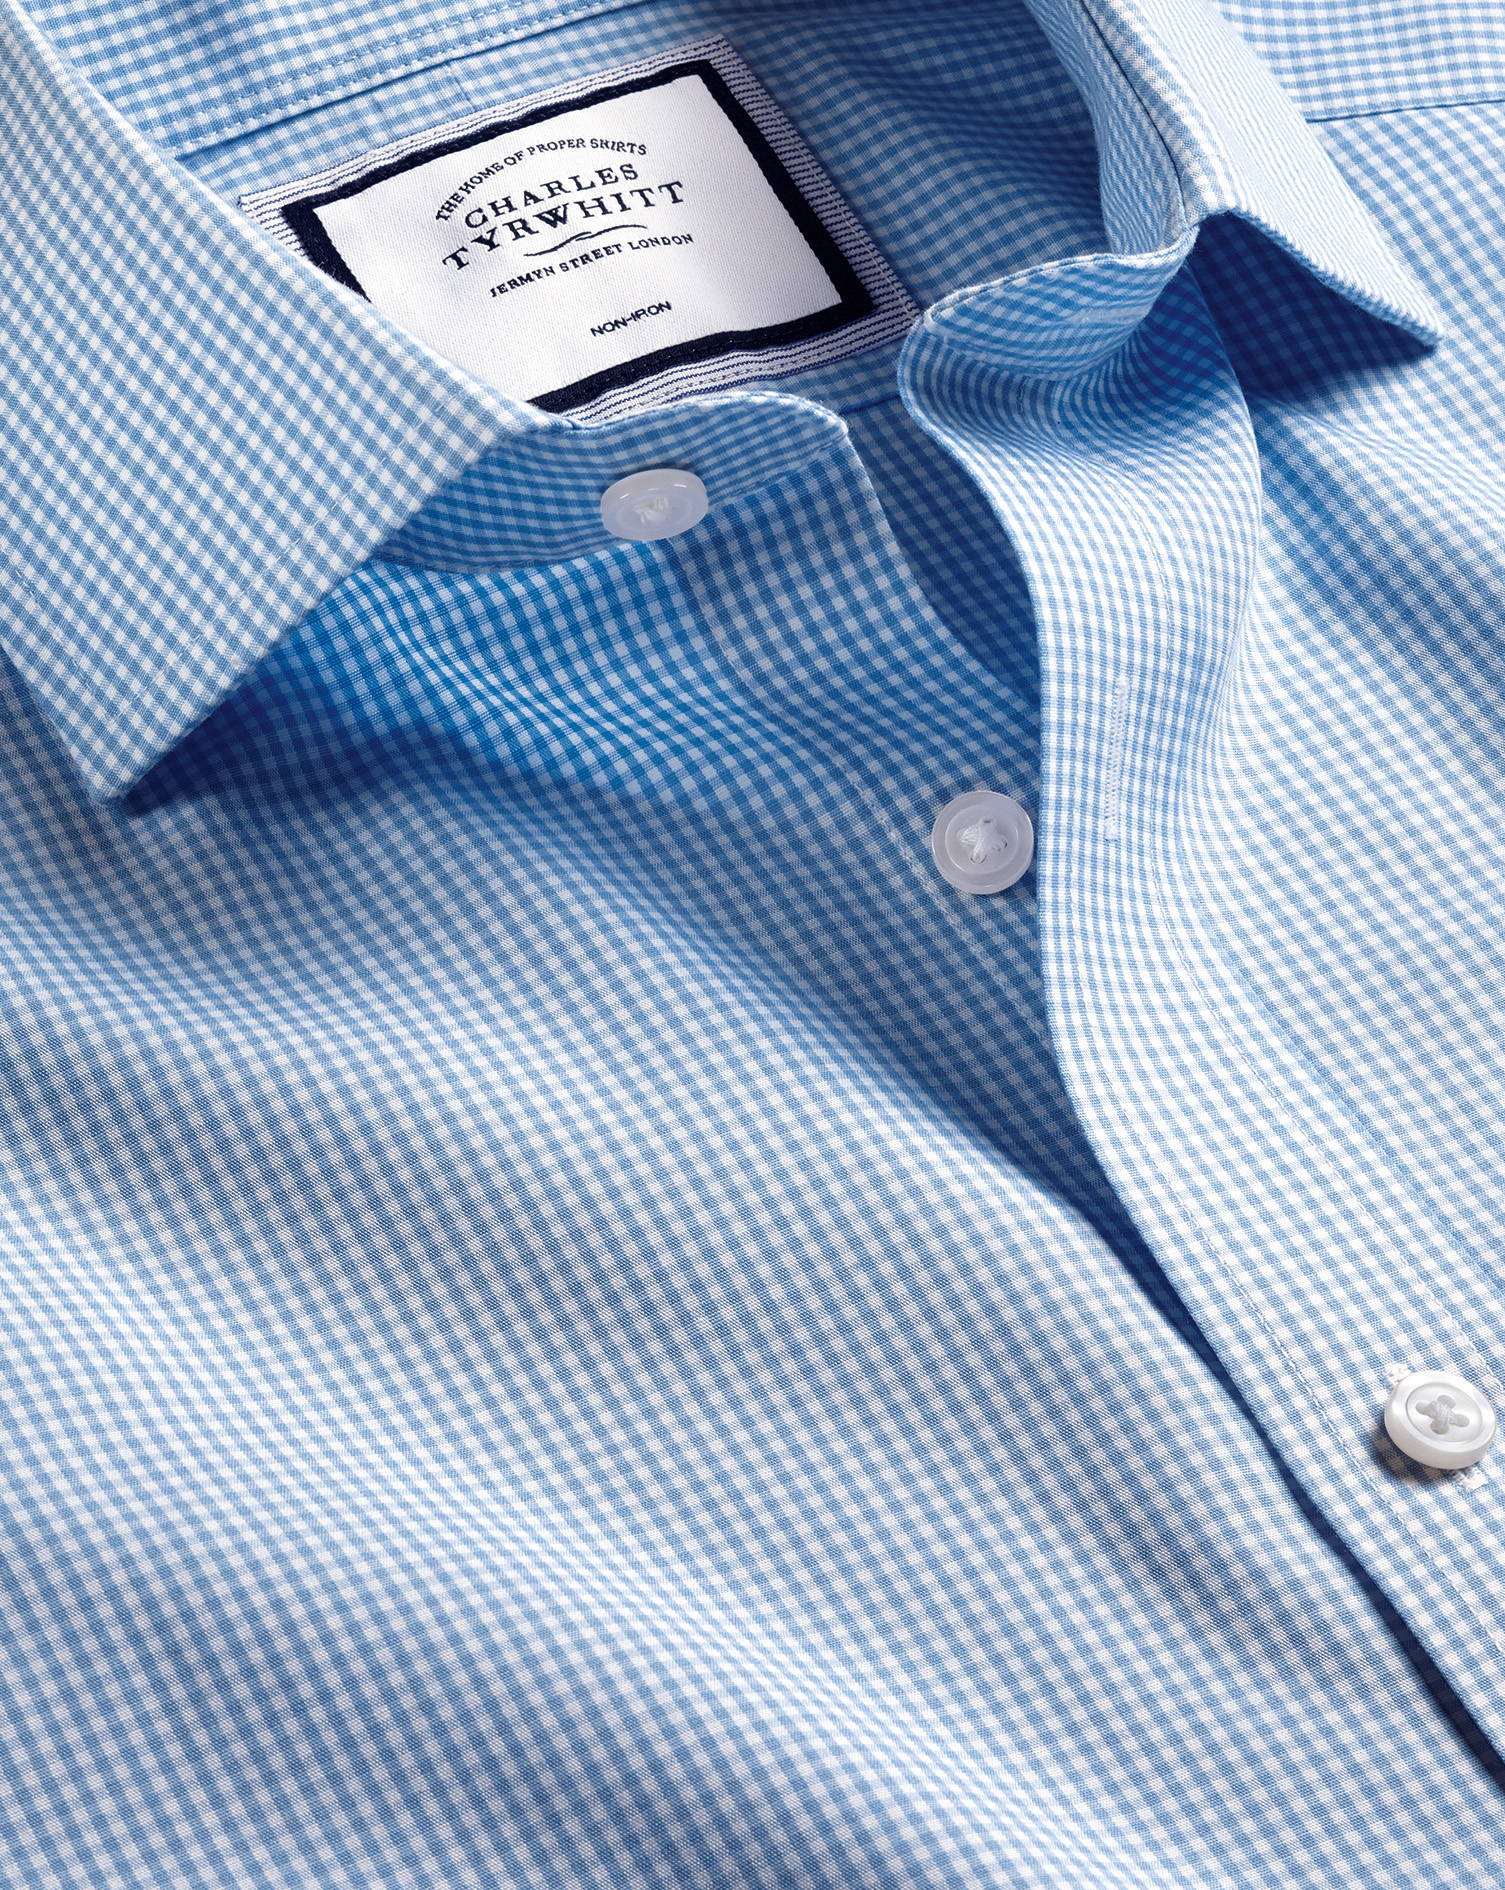 Men's Charles Tyrwhitt Cutaway Collar Non-Iron Mini Gingham Check Dress Shirt - Cornflower Blue Sing